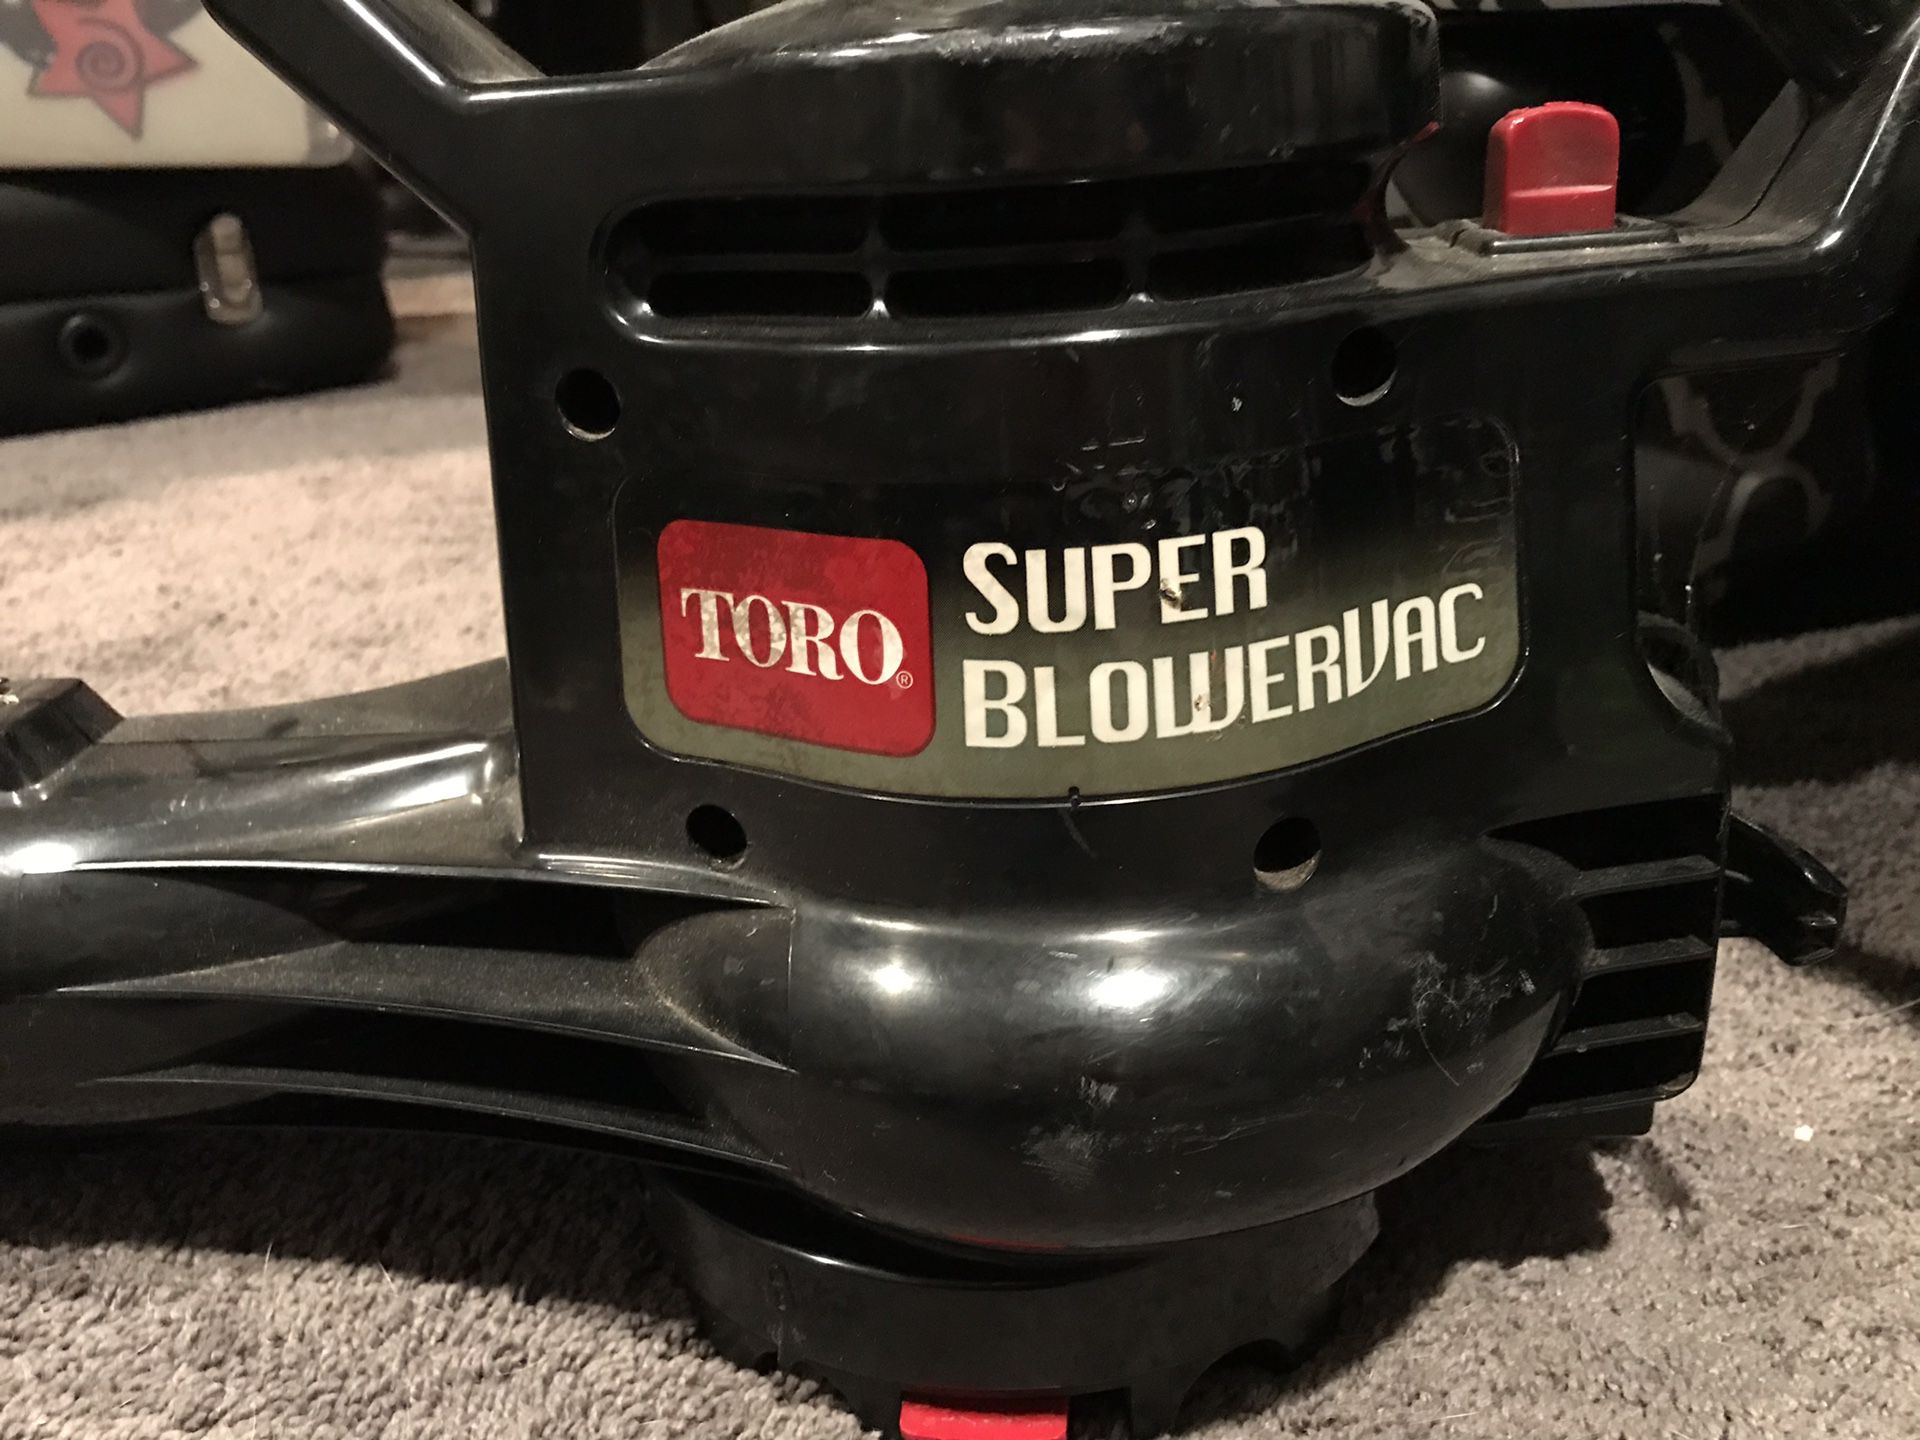 TORO super blowervac leaf blower